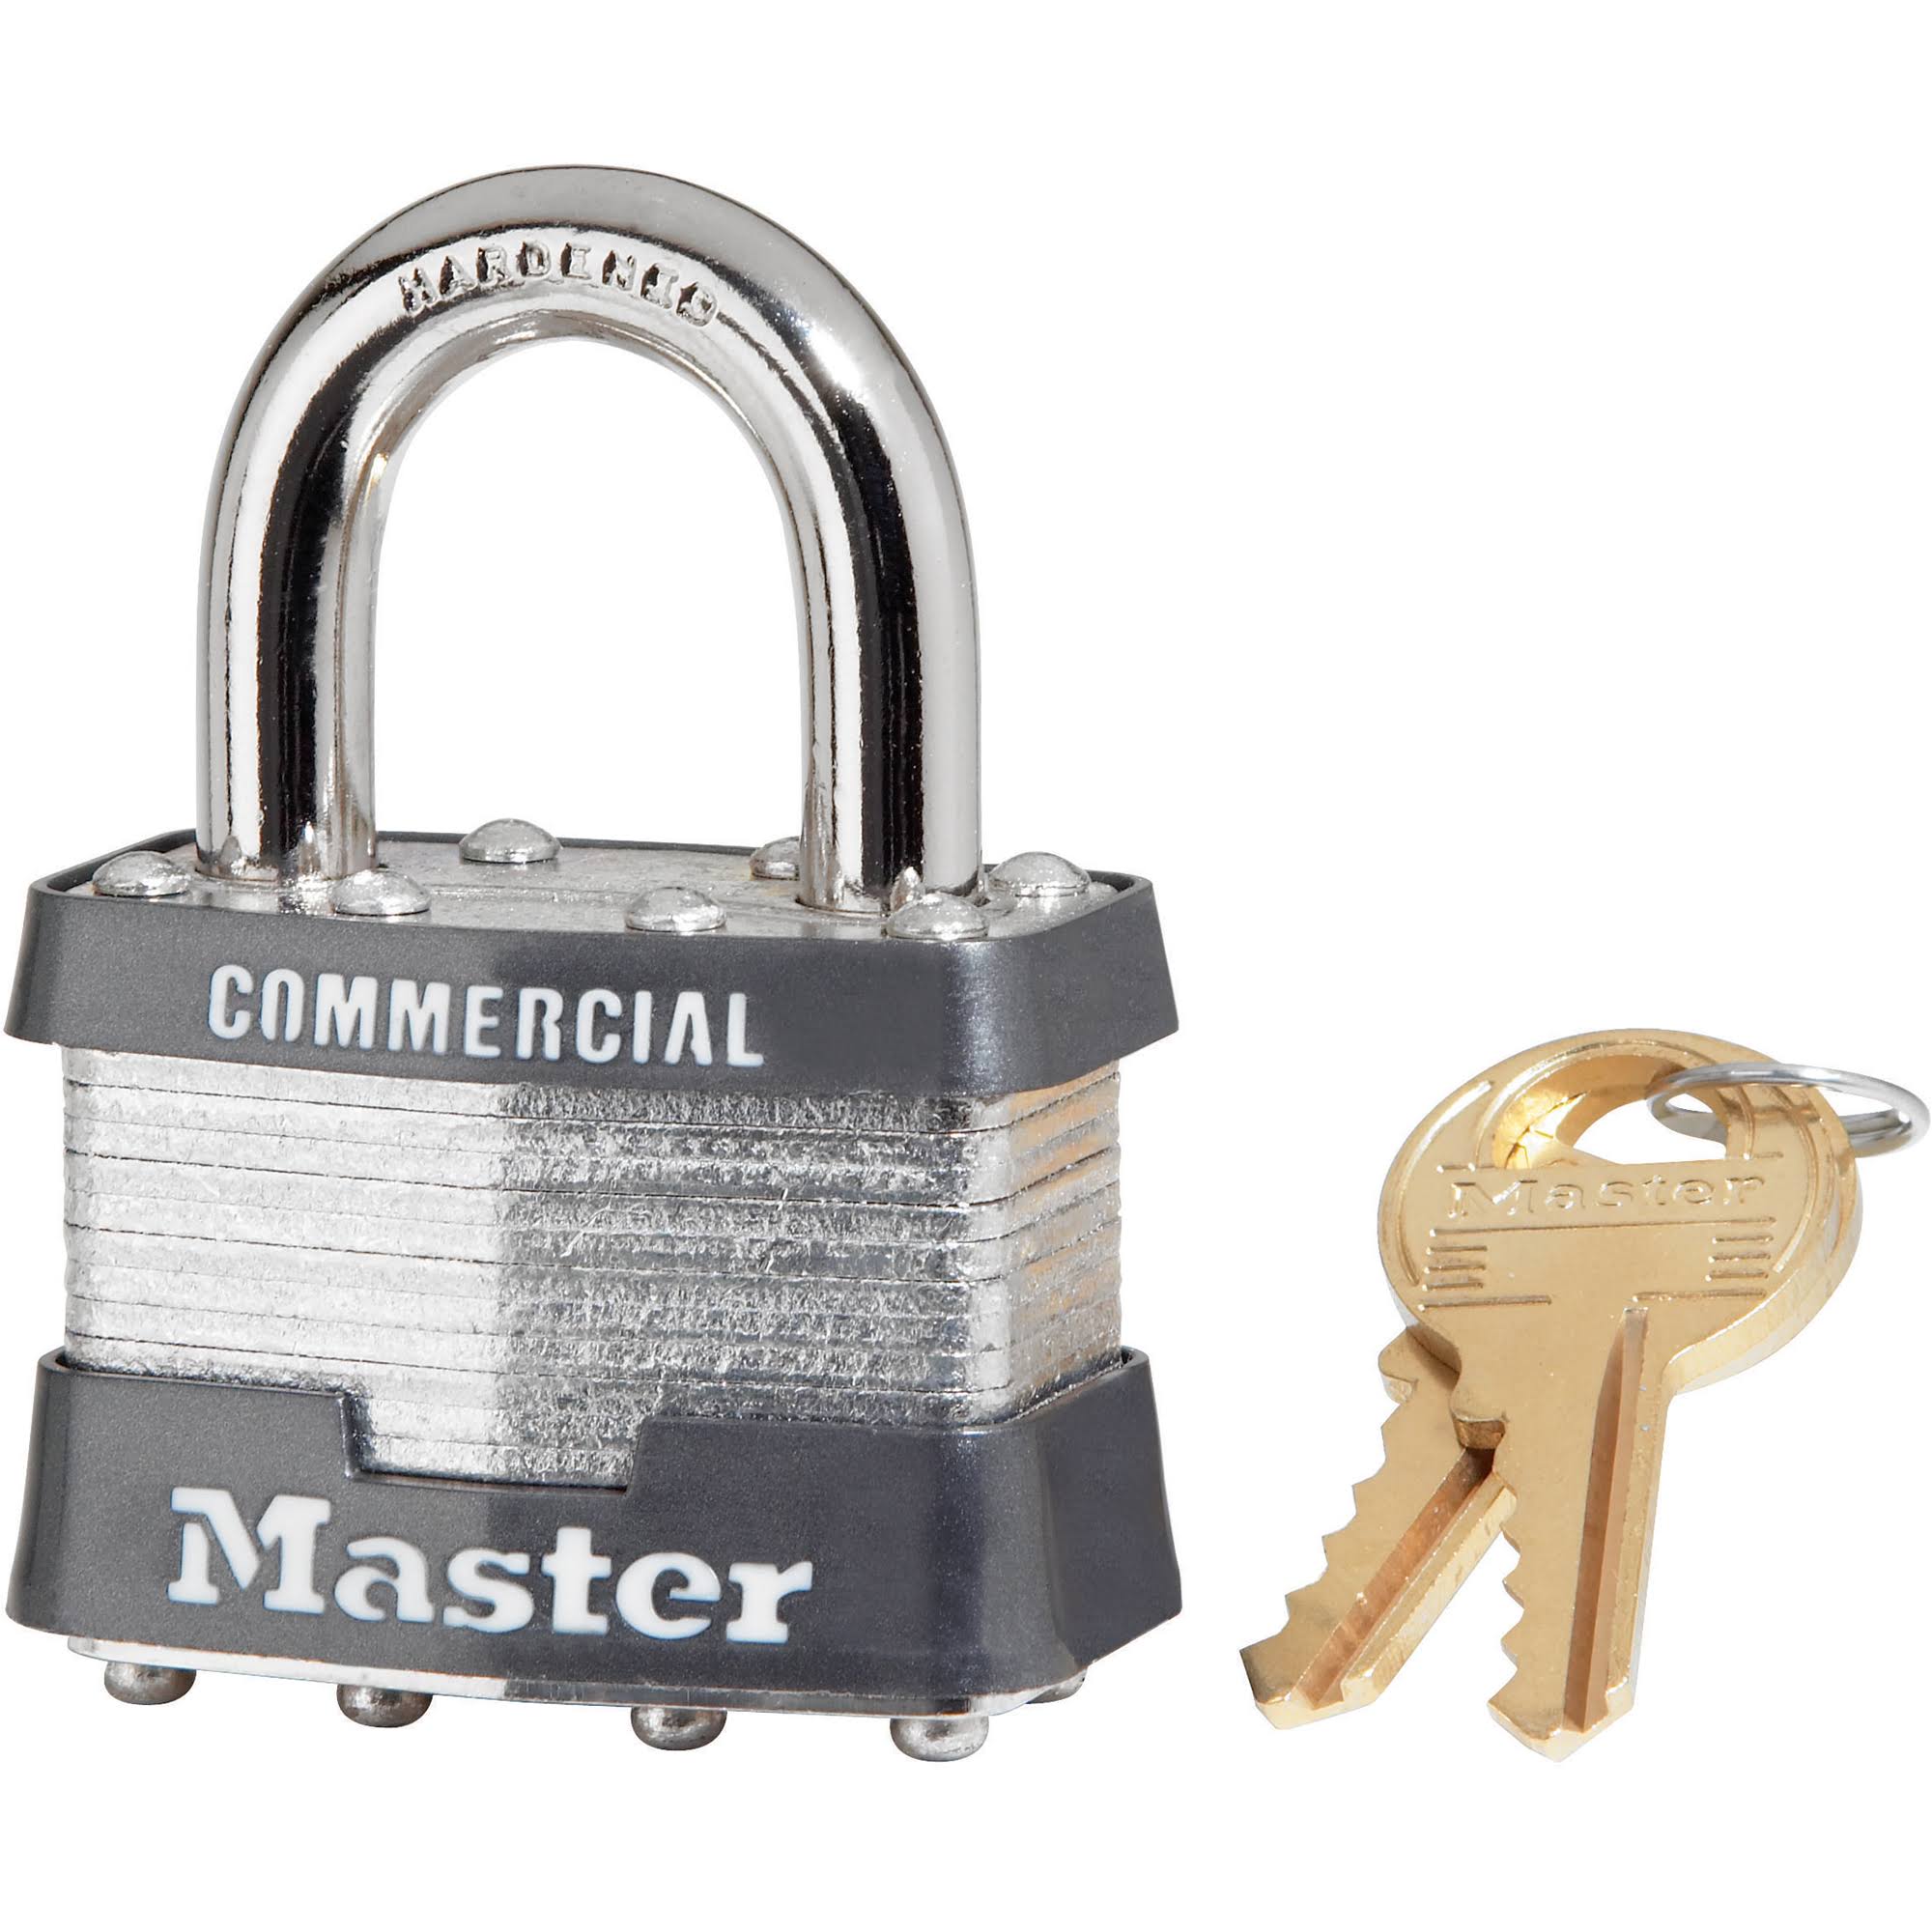 Master Lock 1ka Padlock - 15/16", 1 3/4" Wide, Laminated Steel